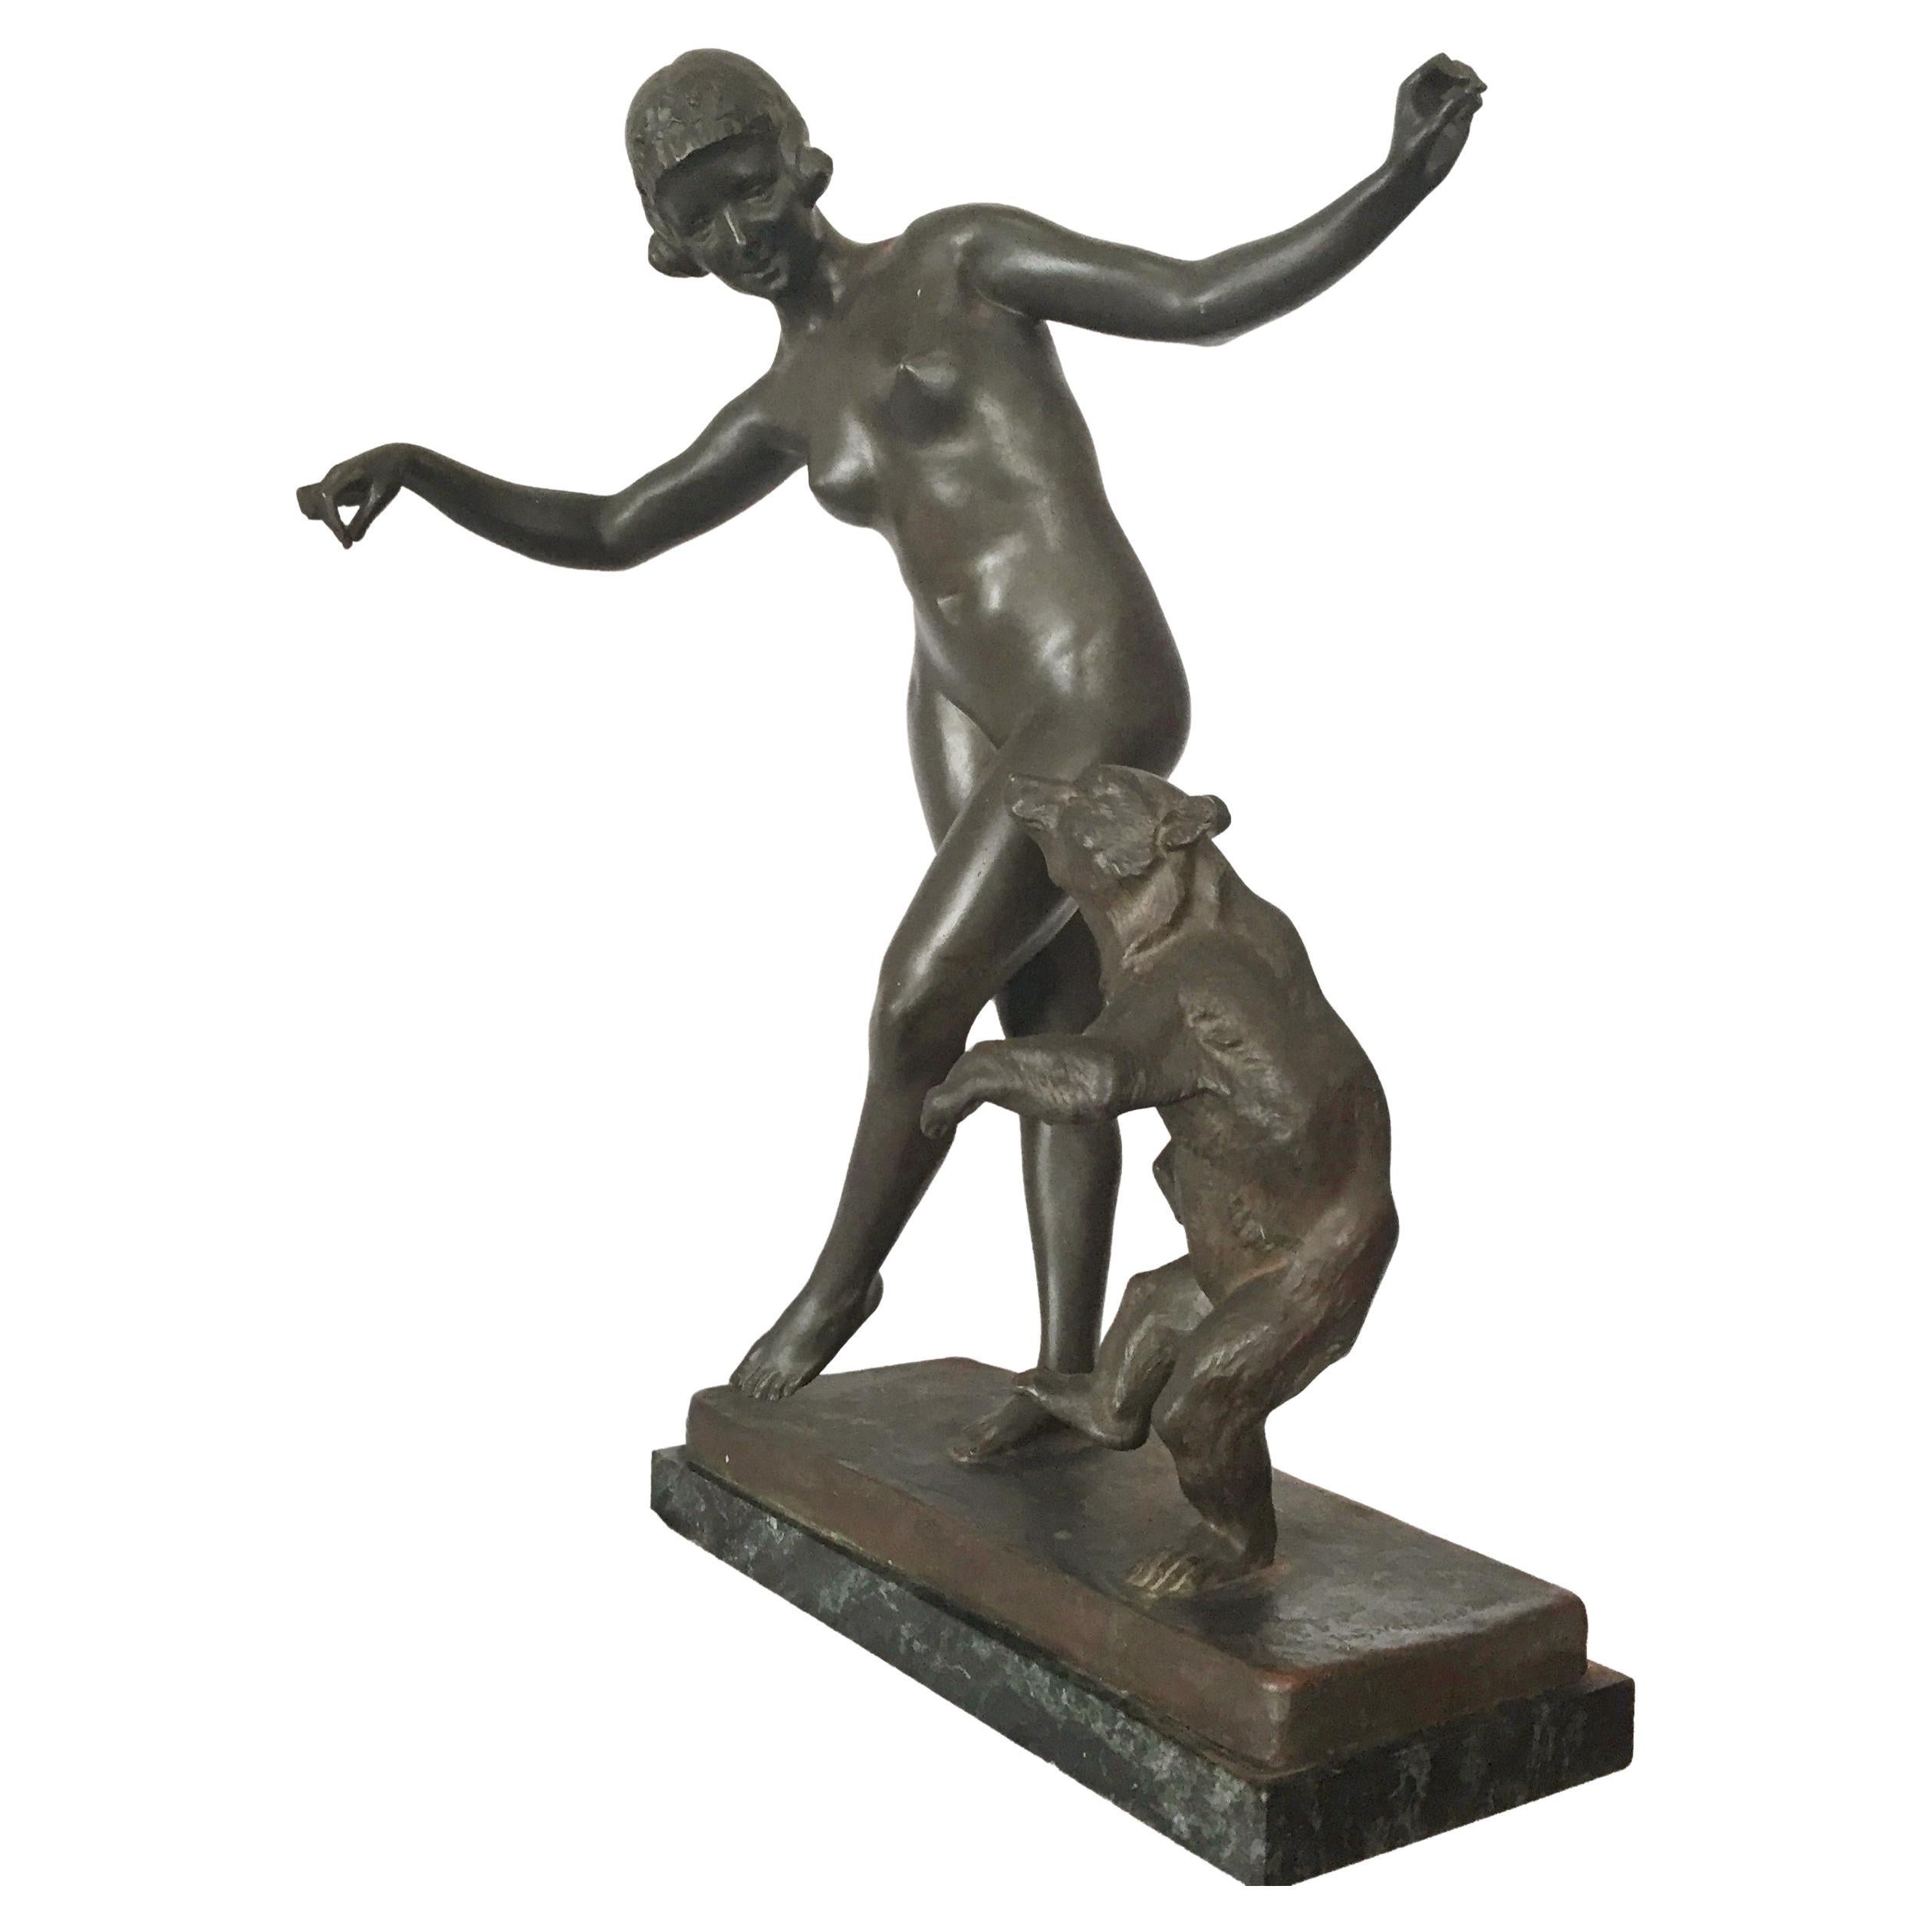 1920s  Jean Verschneider Large French Bronze Sculpture DANCER WITH BEAR CUB Rare